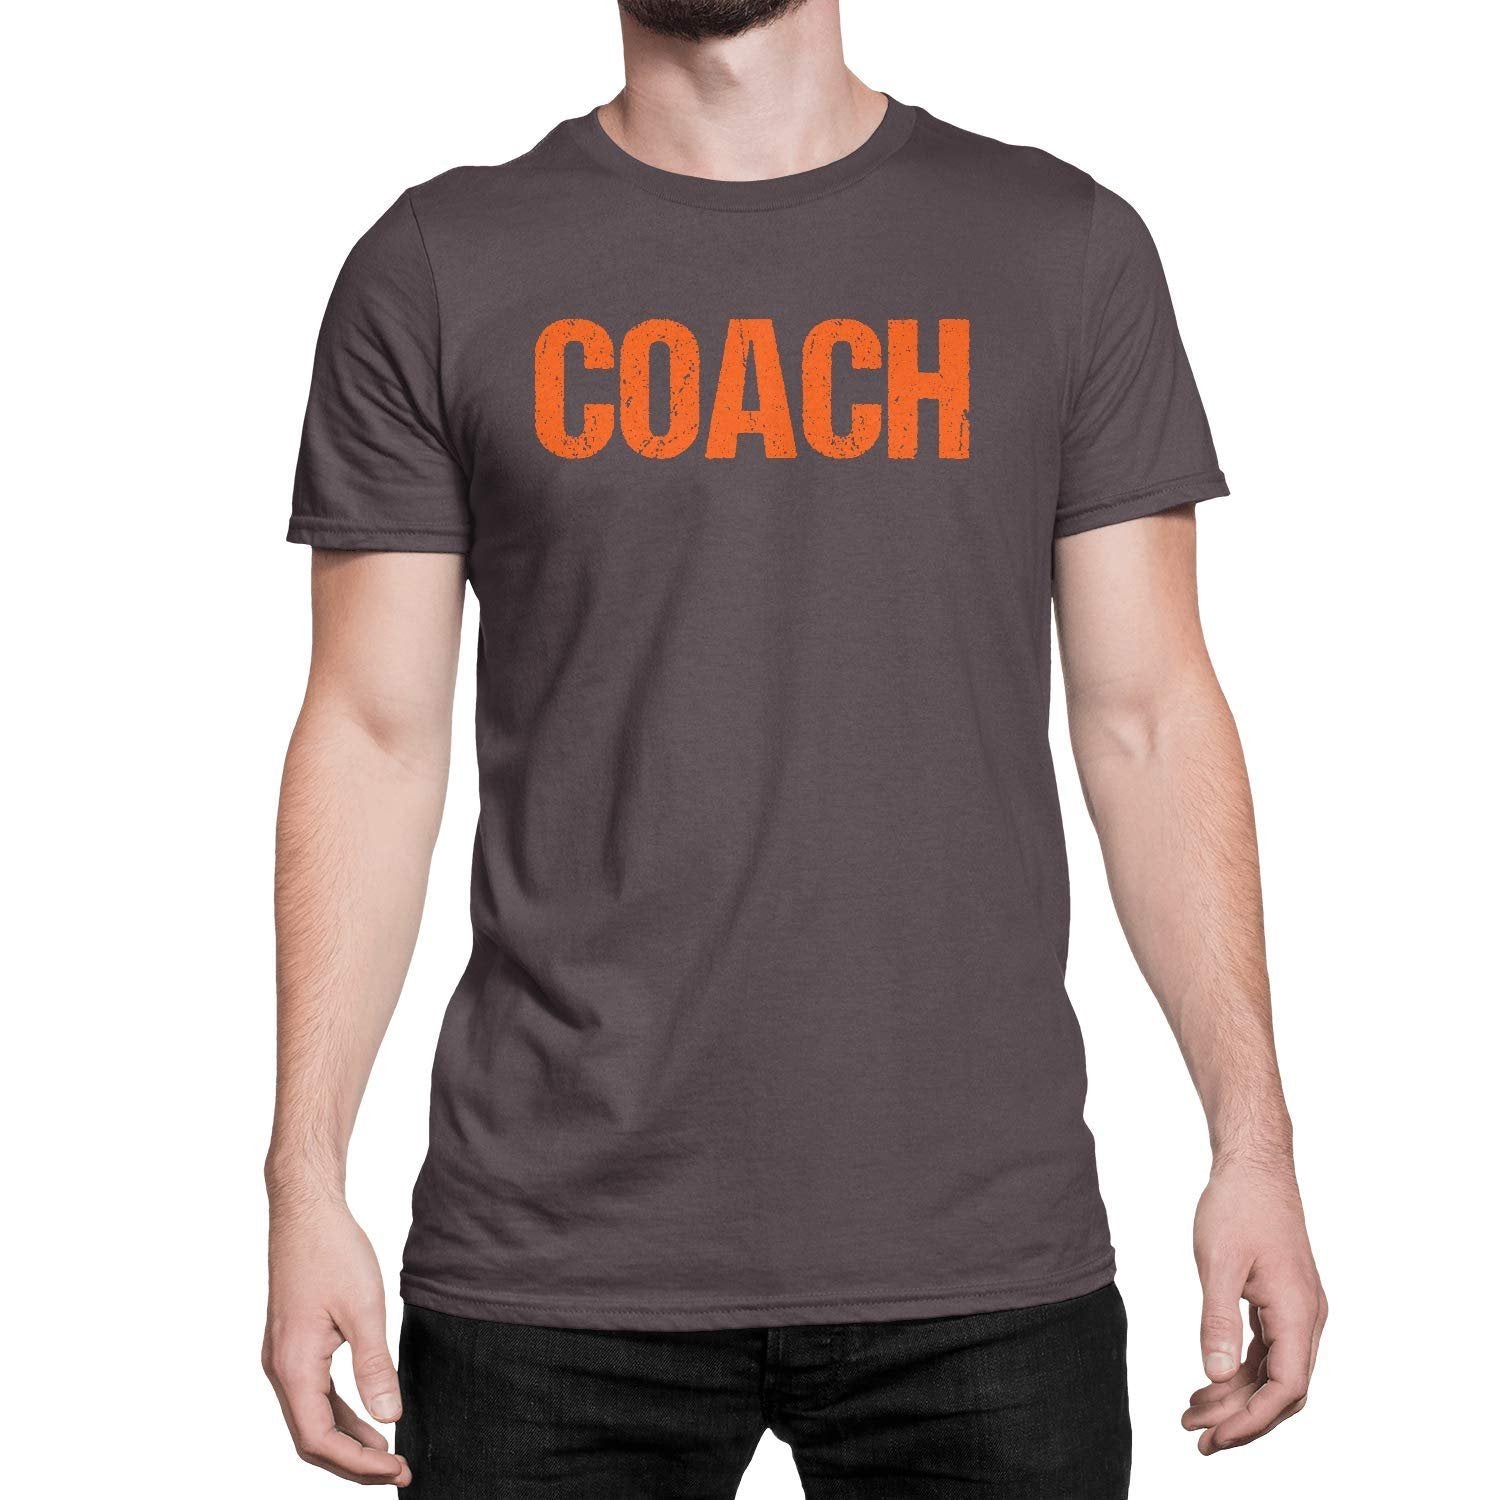 Coach T-Shirt Sports Coaching Tee Shirt (Brown & Orange, Distressed)